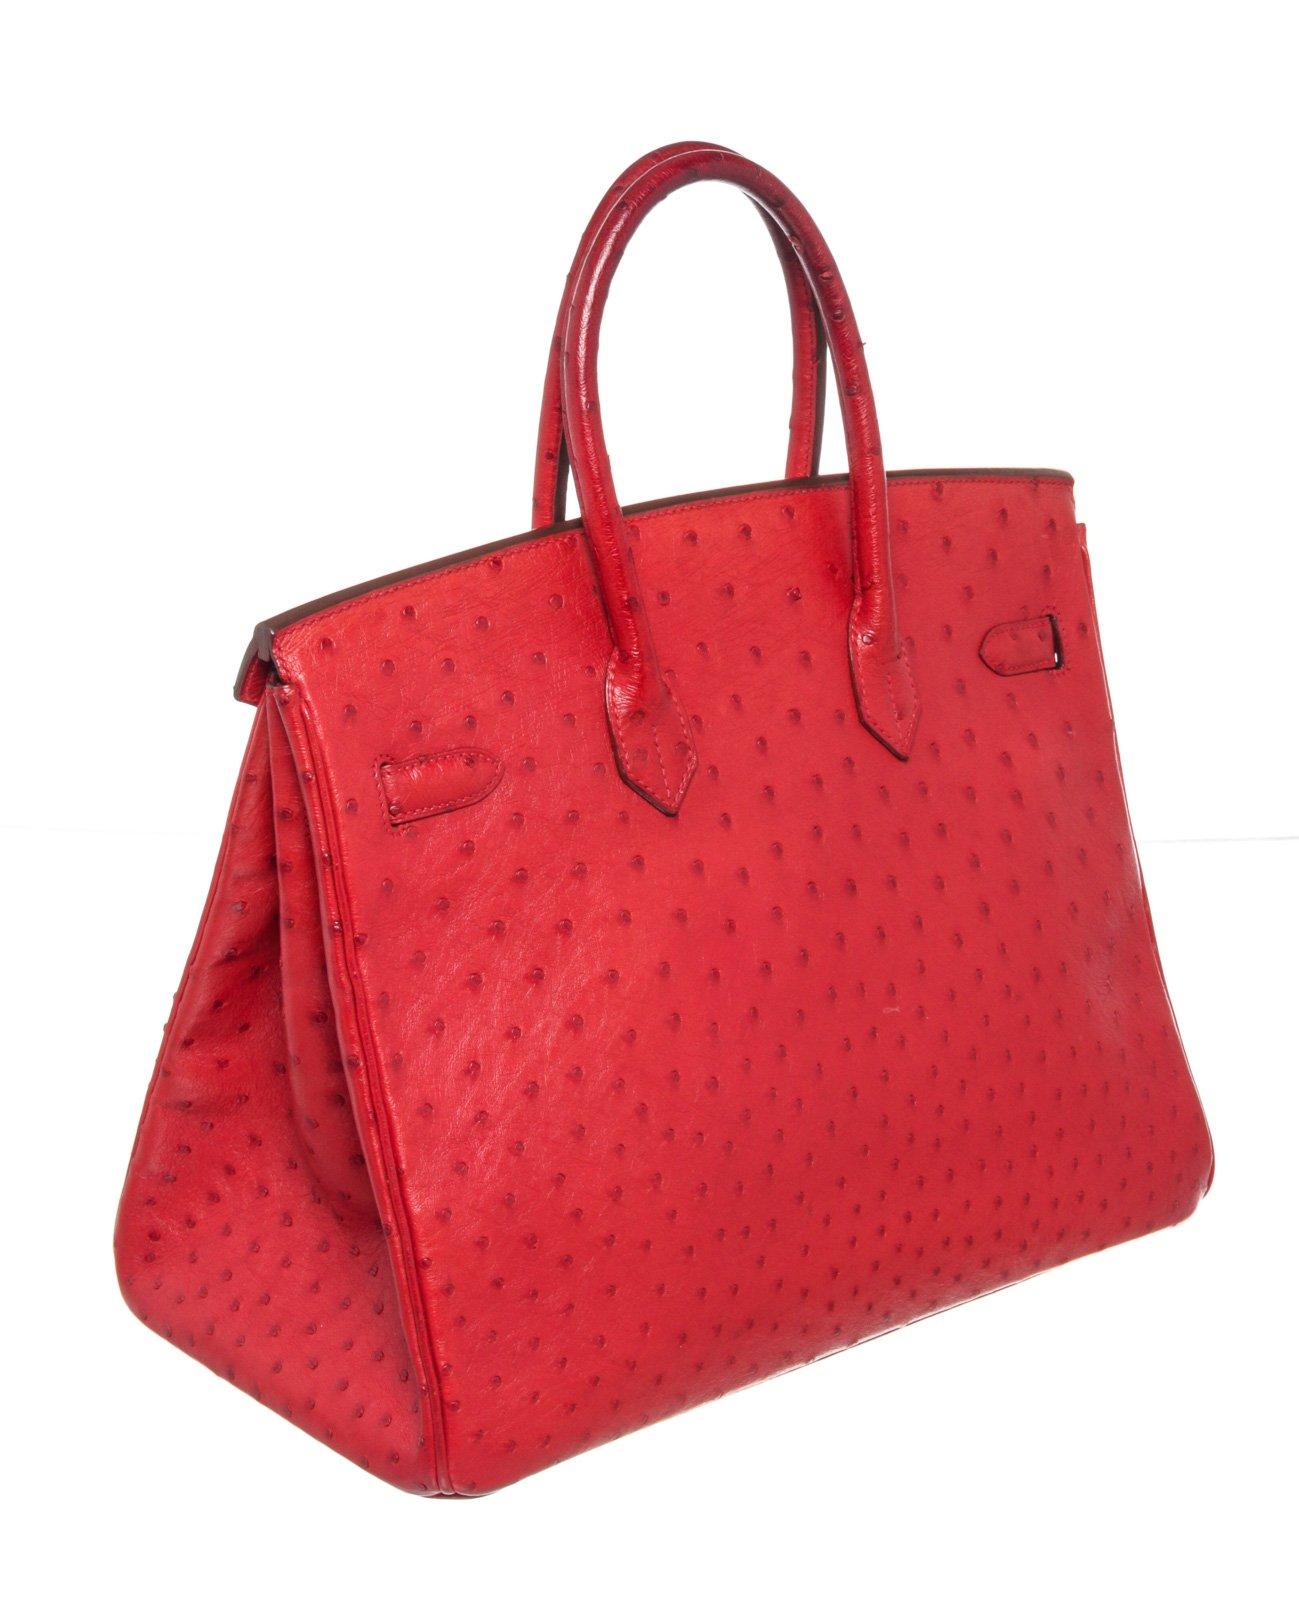 Hermes Red Leather Ostrich GHW Birkin 35cm Satchel Bag 3